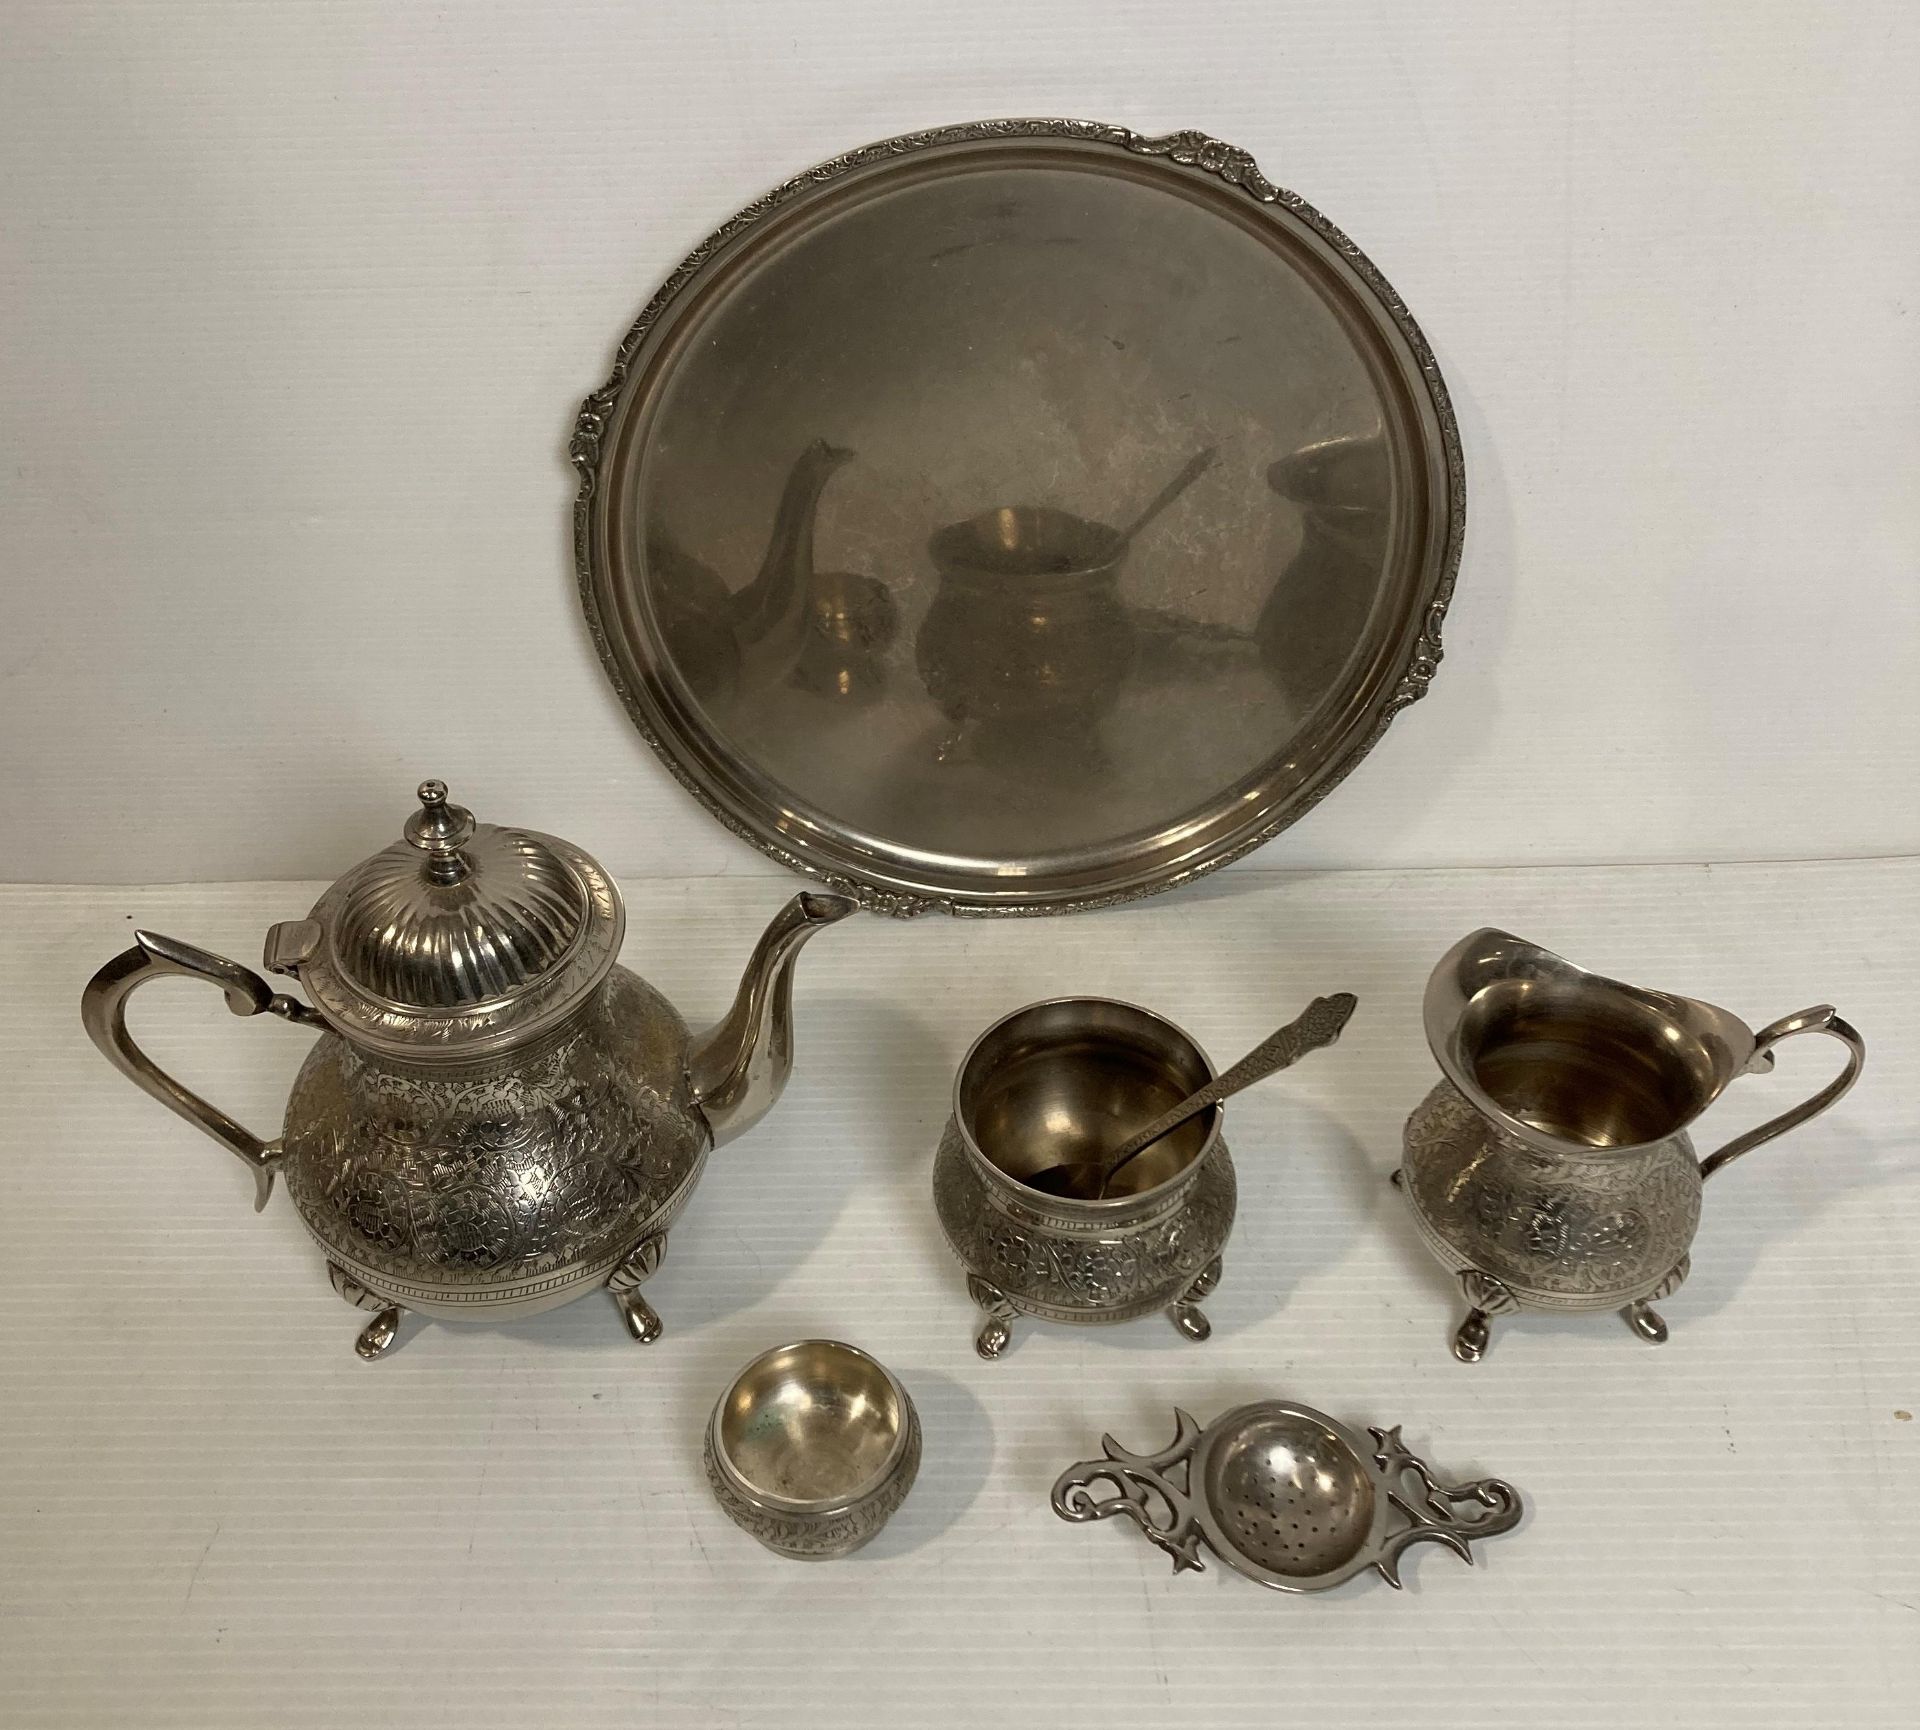 A six-piece Indian plated tea-service including tea pot, milk jug, sugar bowl, tray,